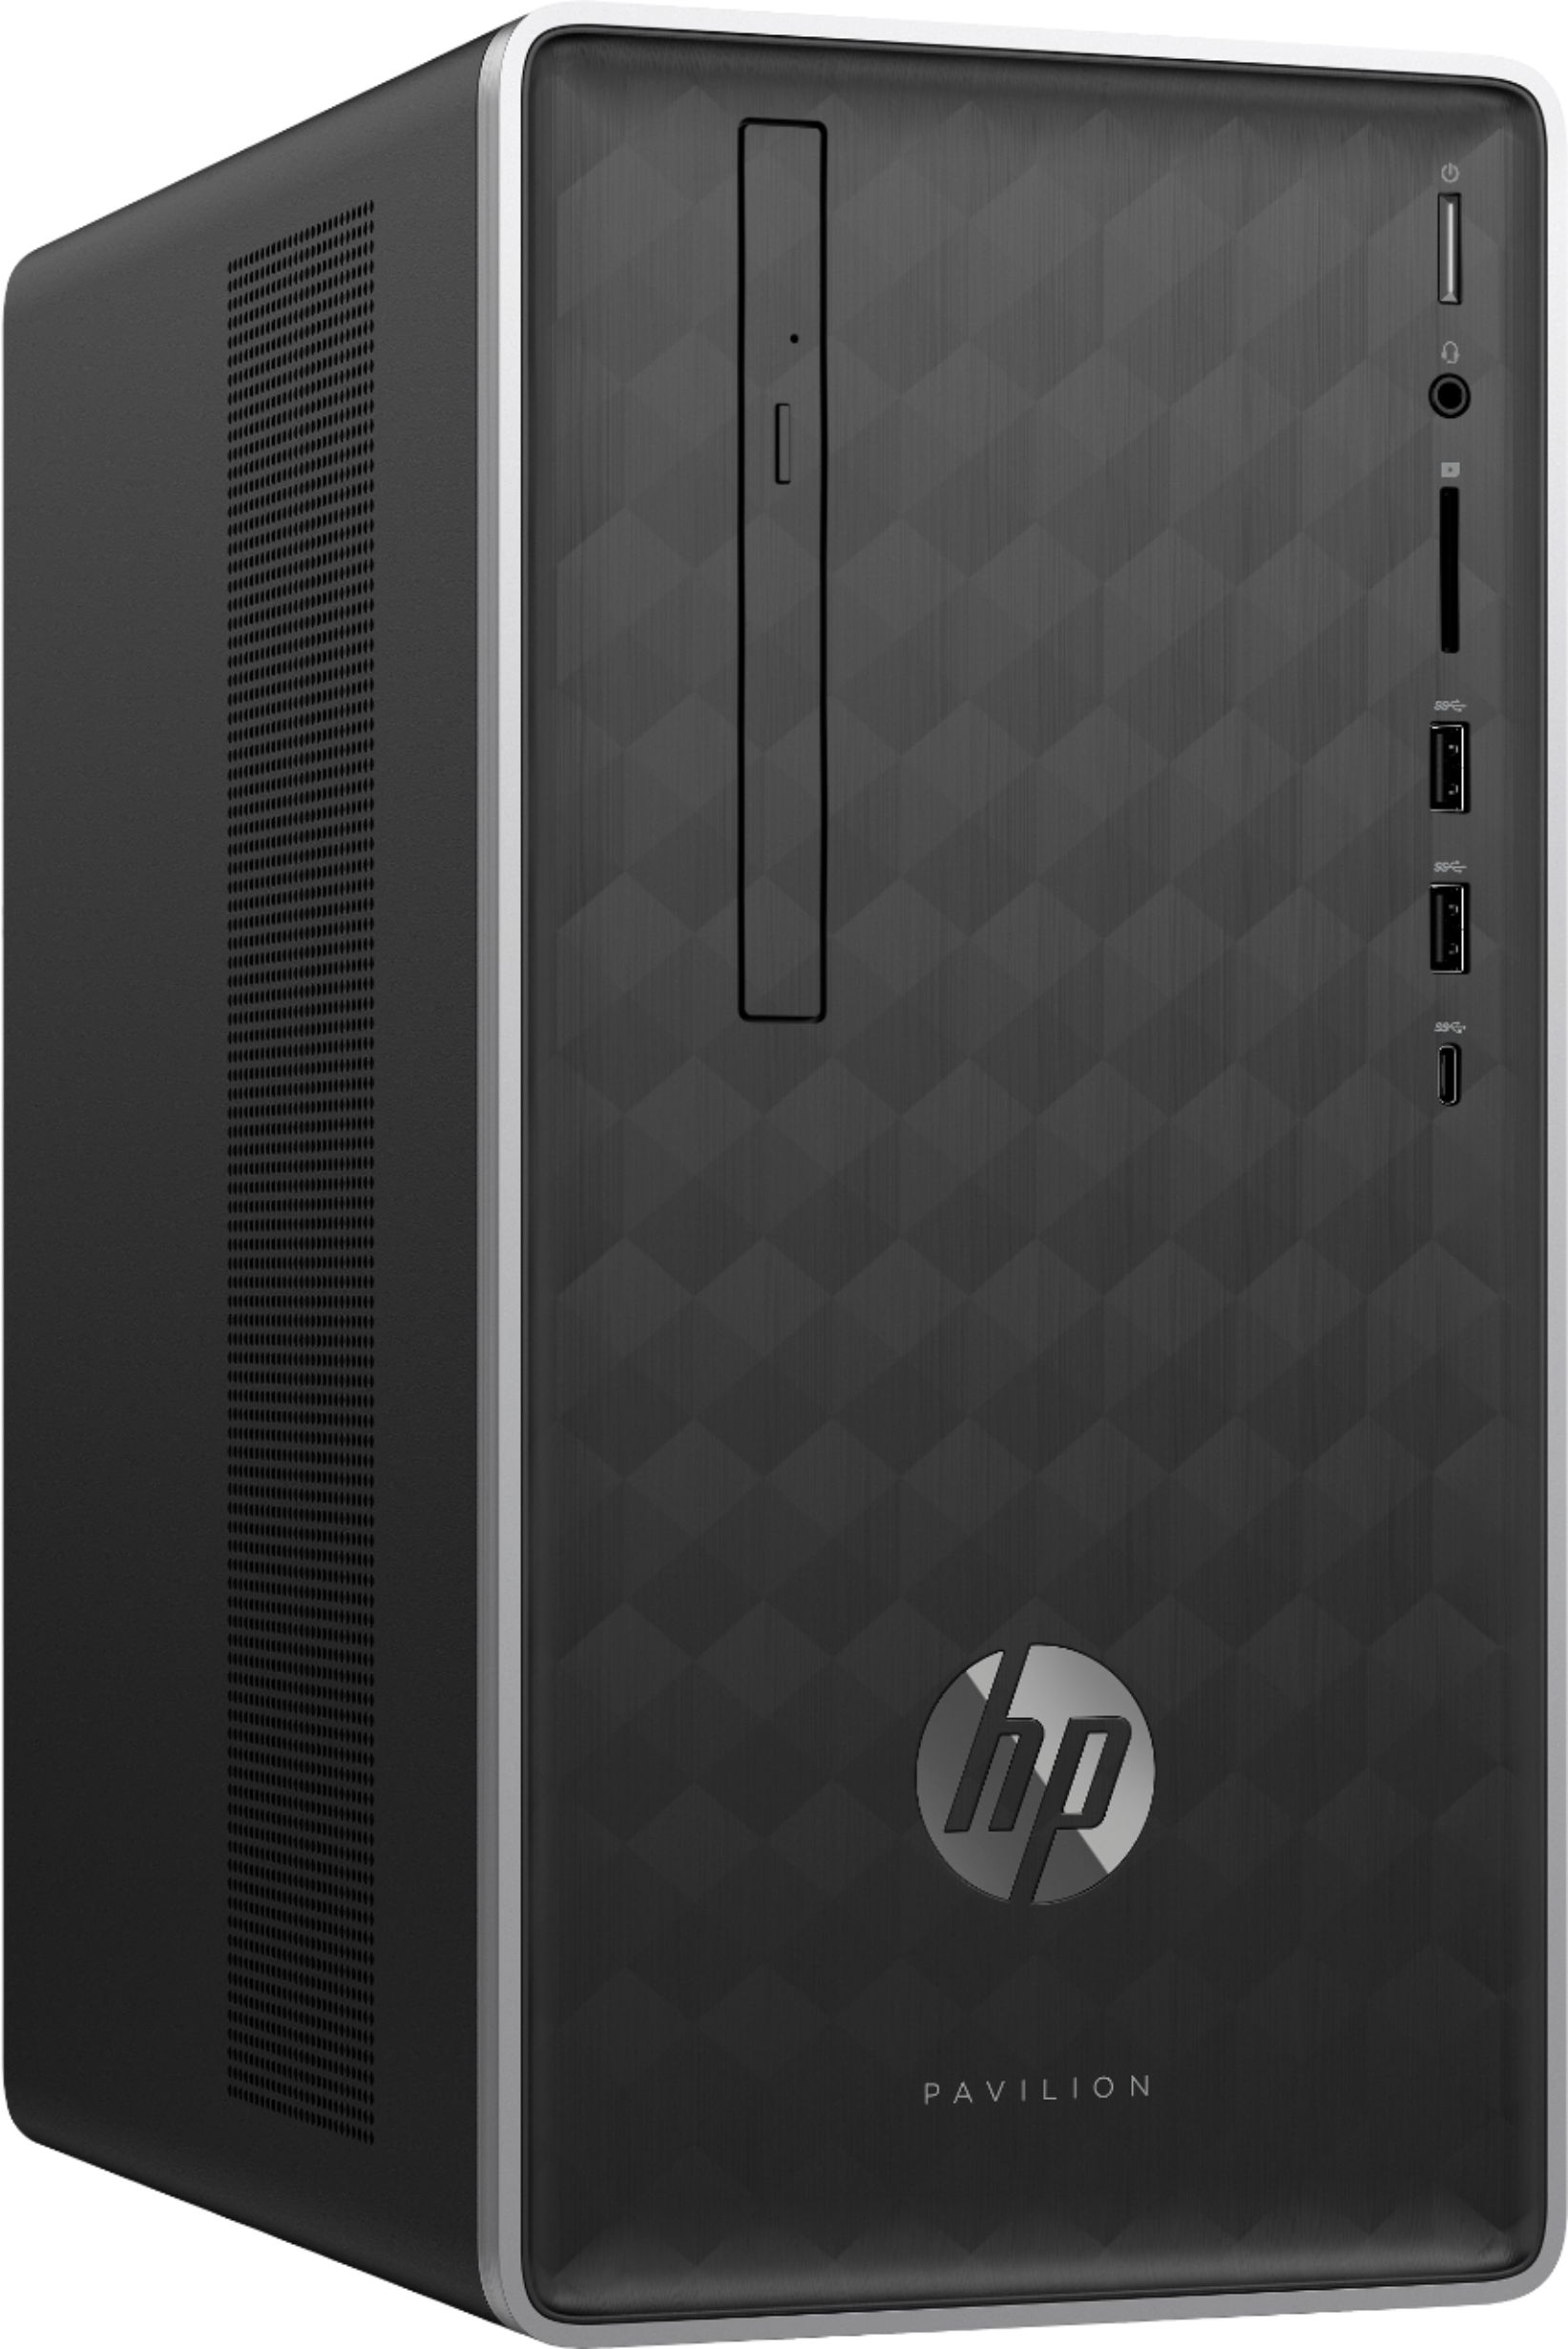 HP Pavilion Desktop AMD Ryzen 5-Series 